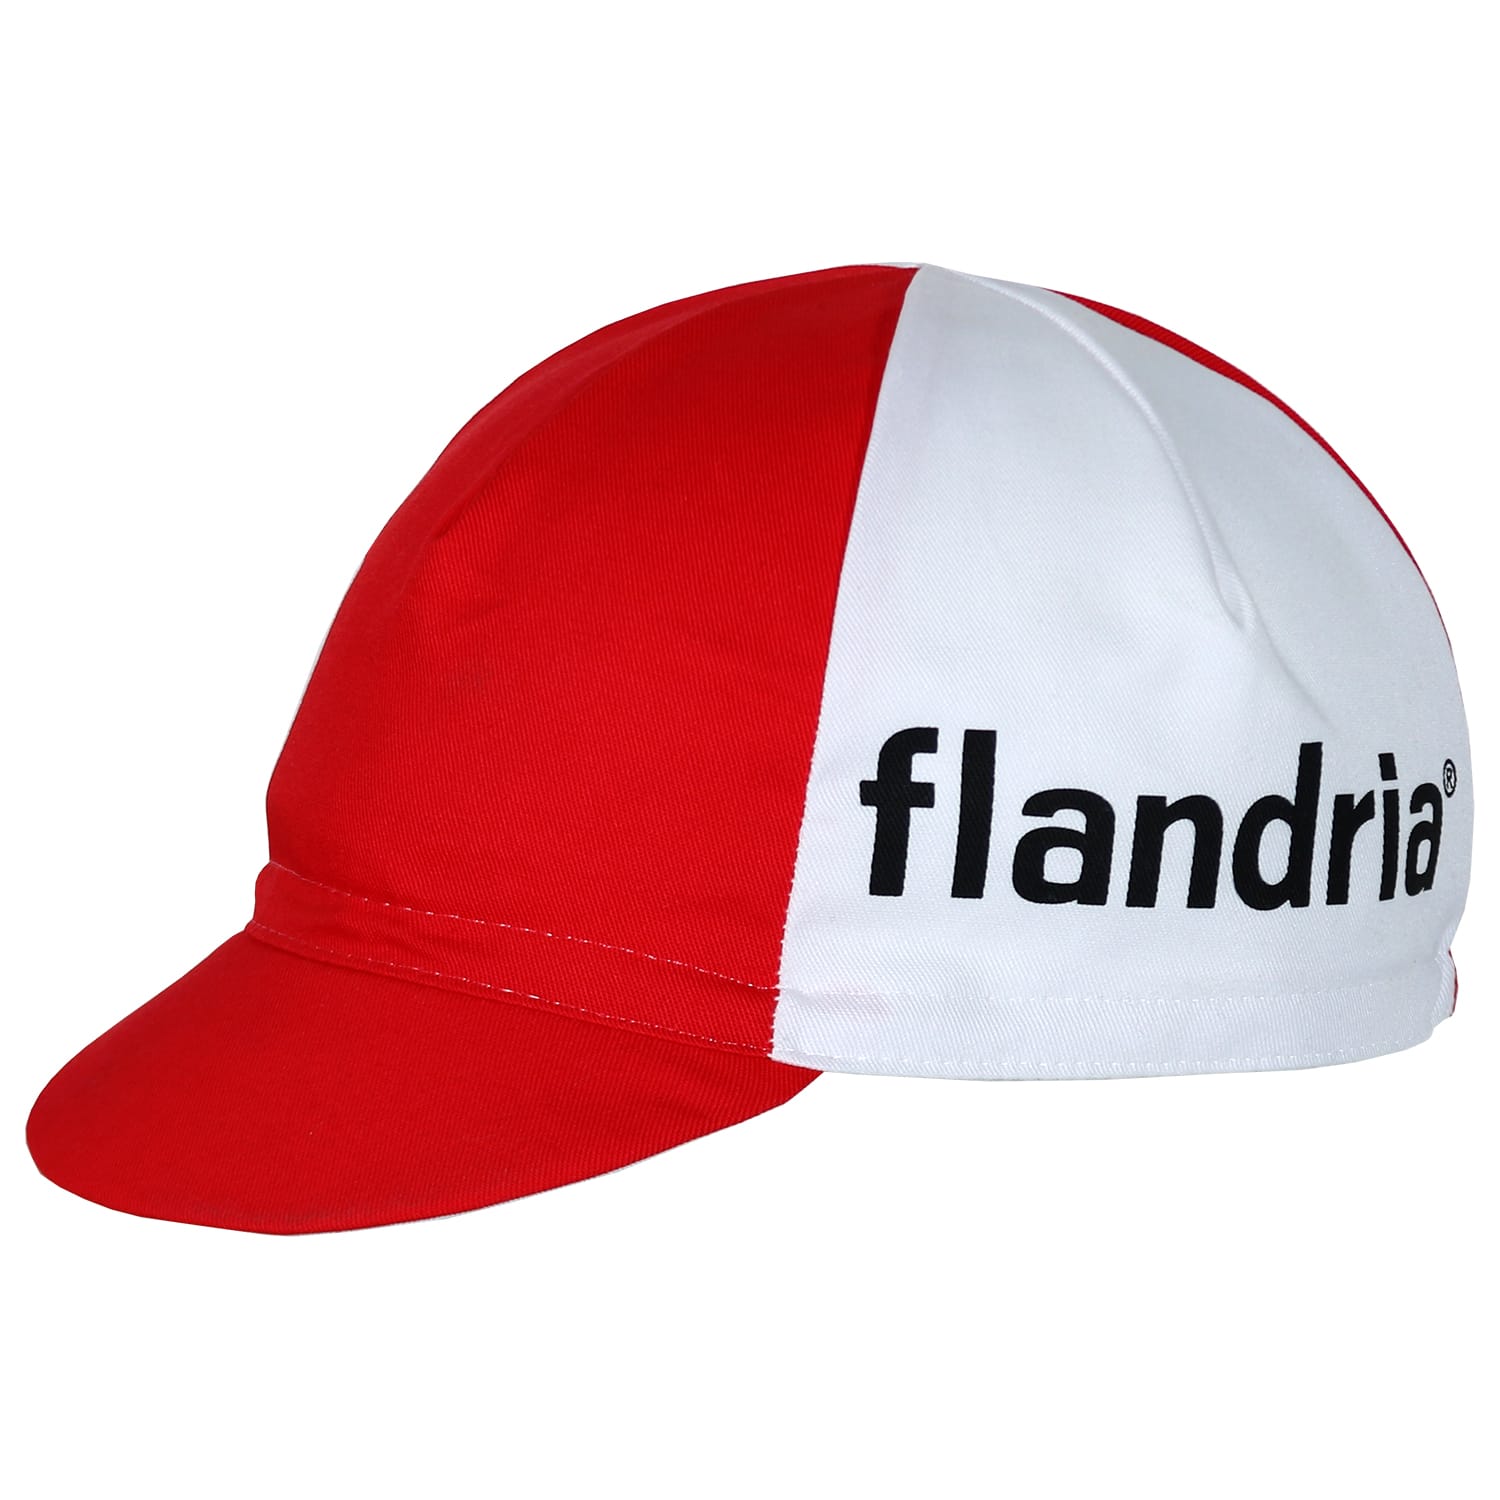 Flandria Retro Cycling Cap